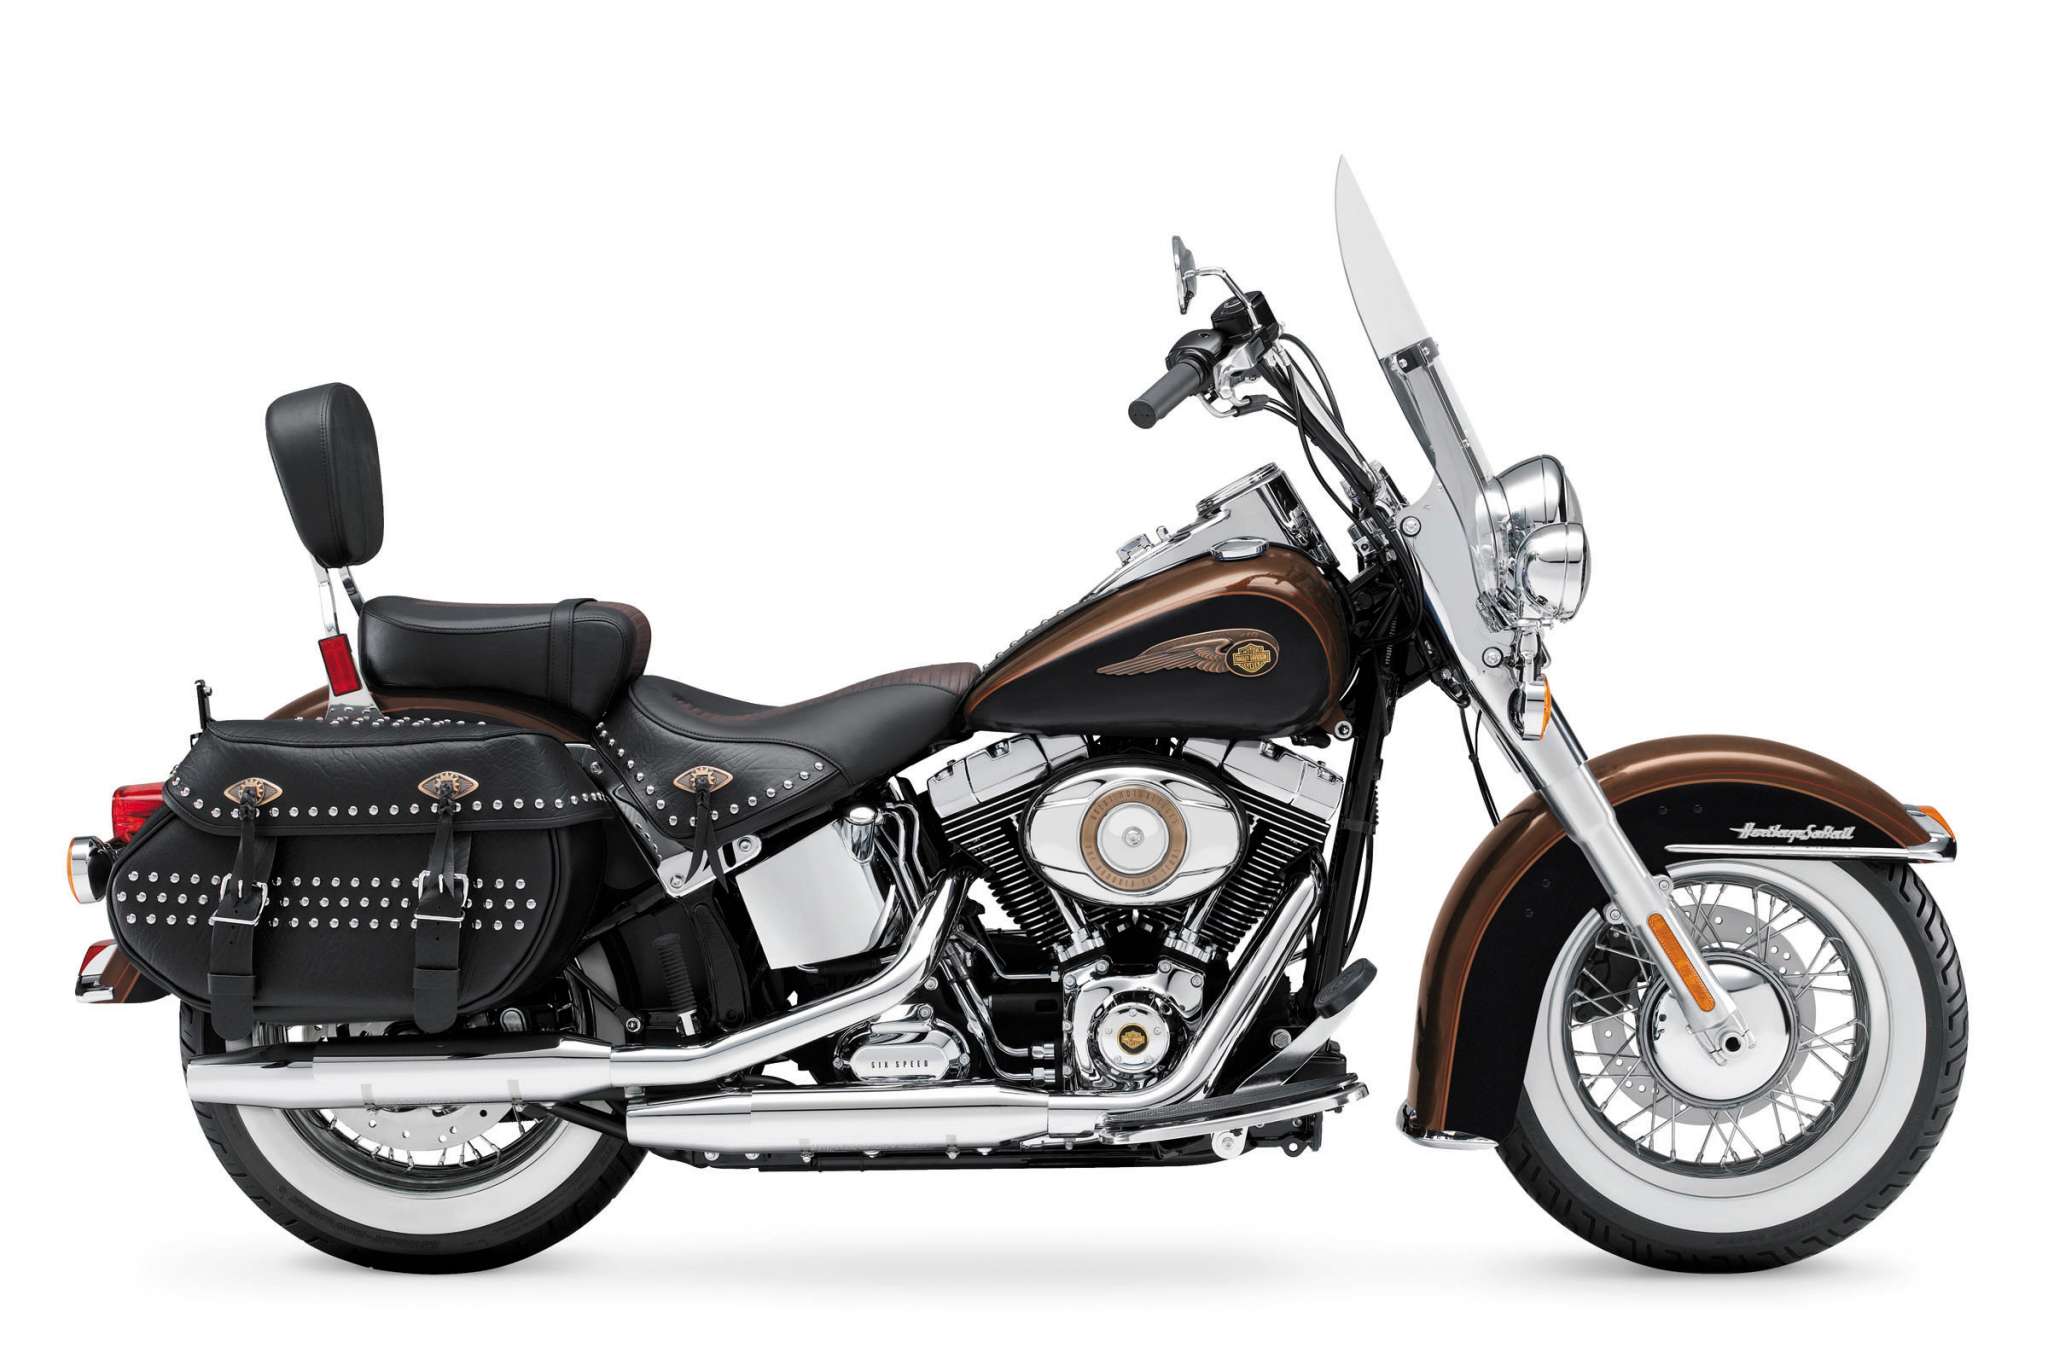 2013 Harley Davidson Flstc Heritage Softail Classic 110th Anniversary Review